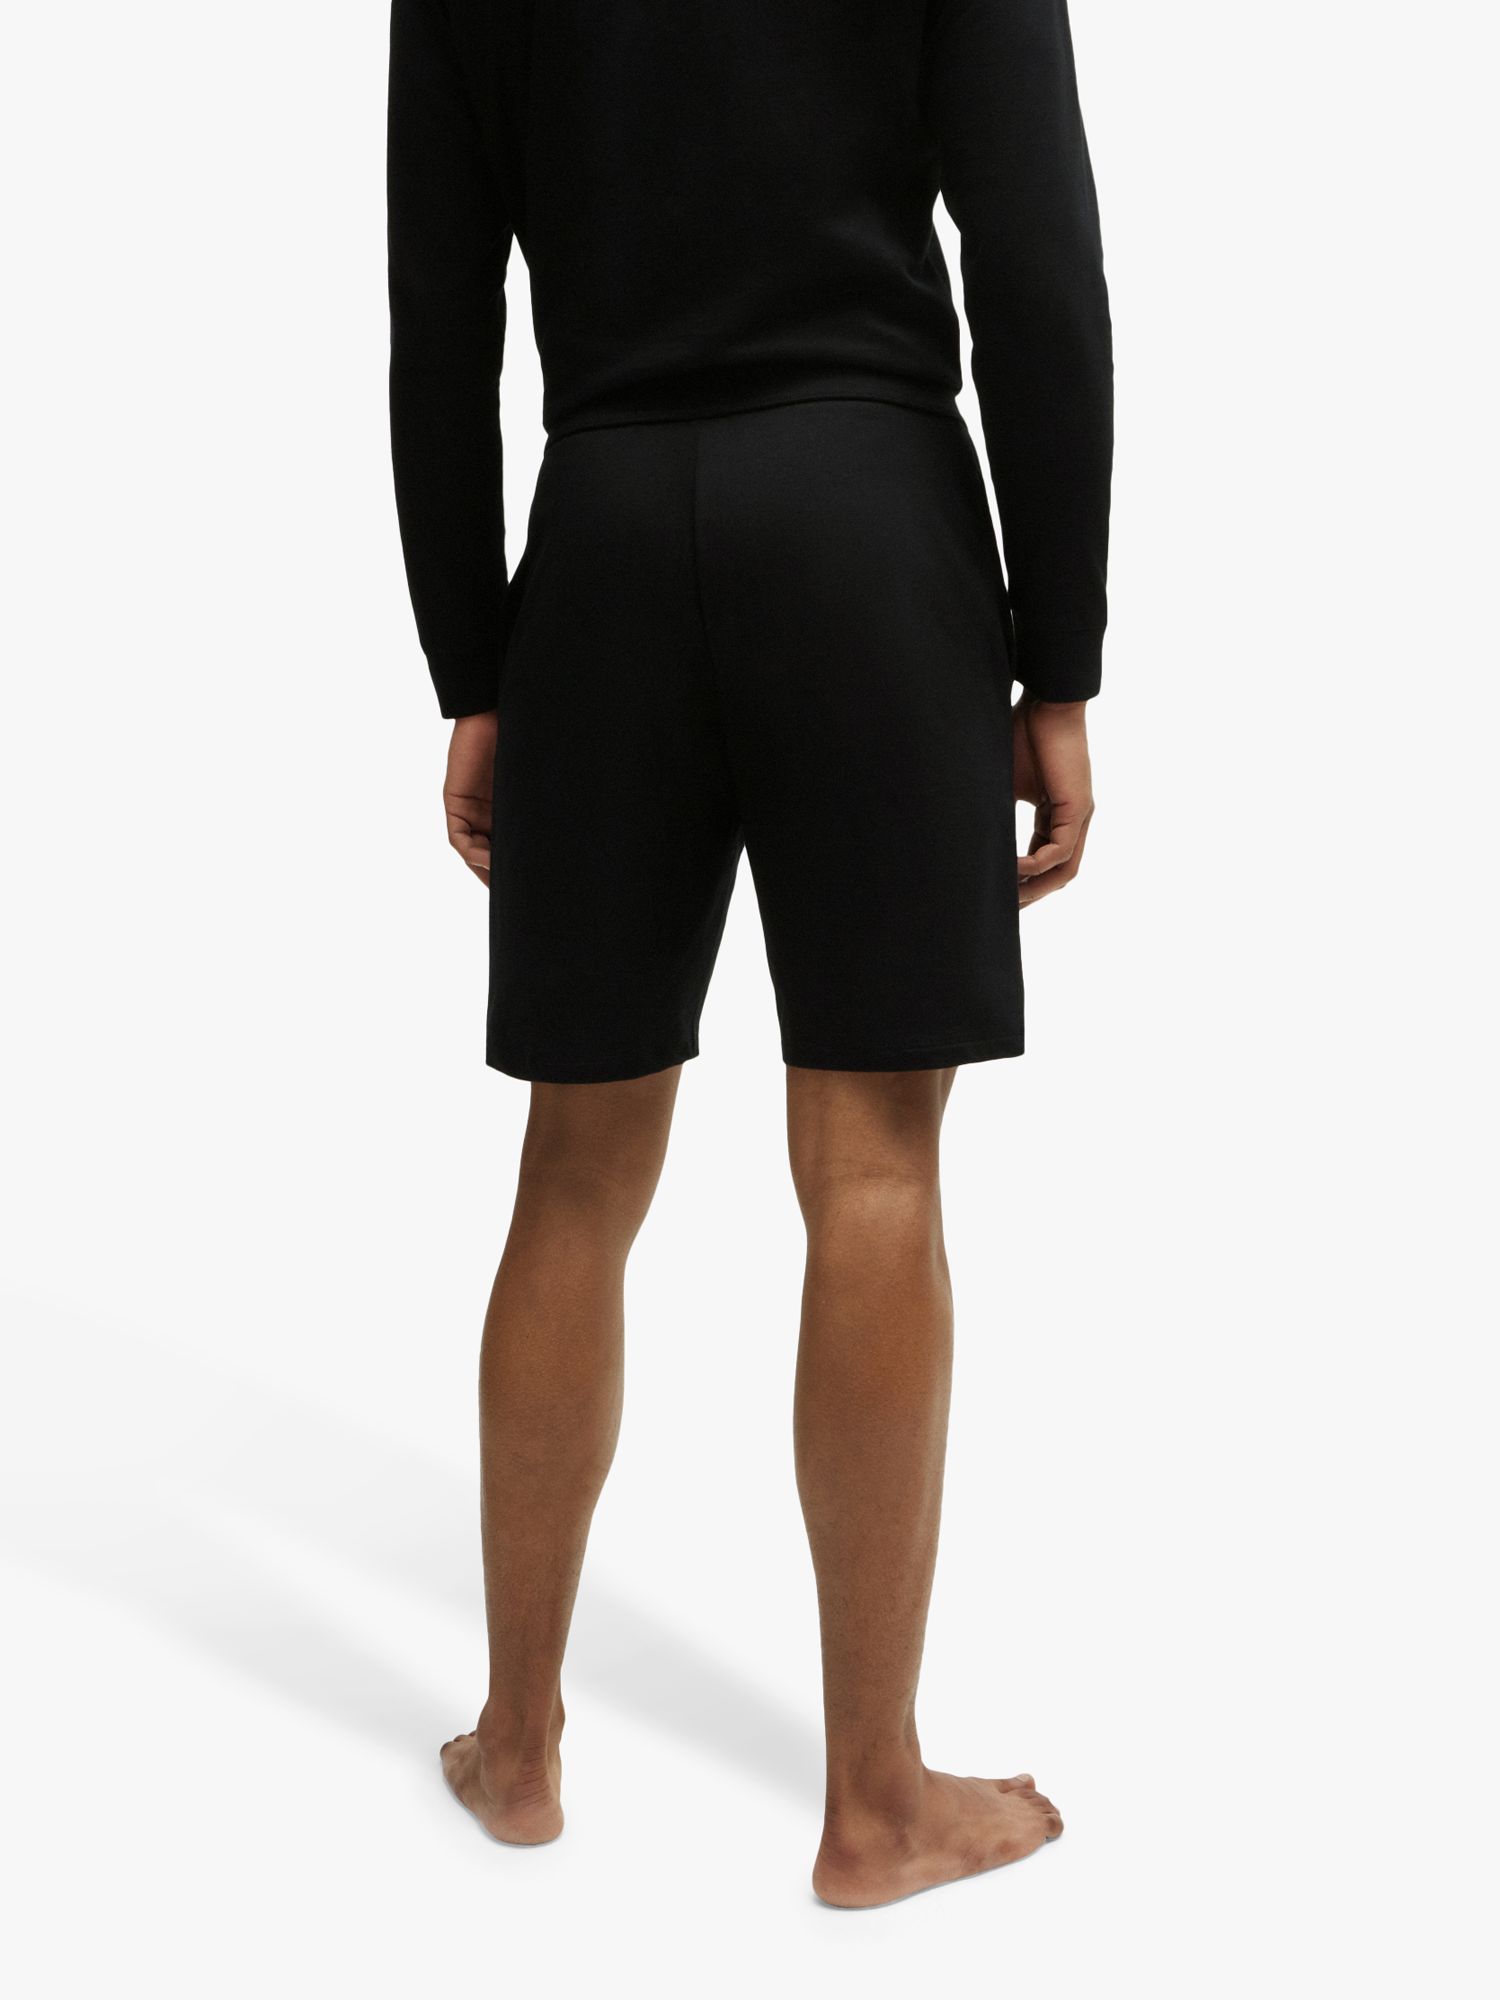 BOSS Authentic Shorts, Black, L